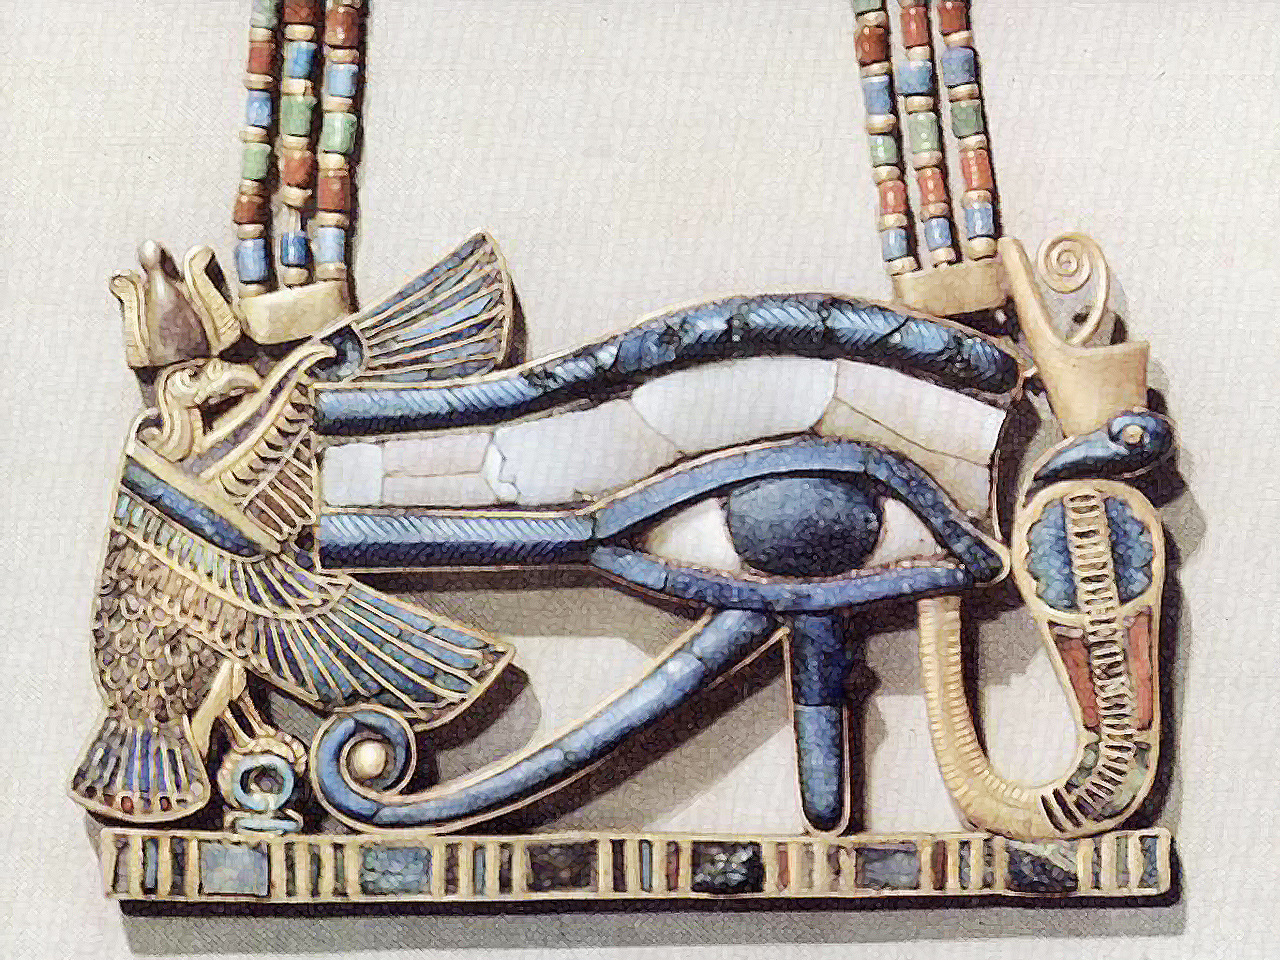 The Eye Of Horus